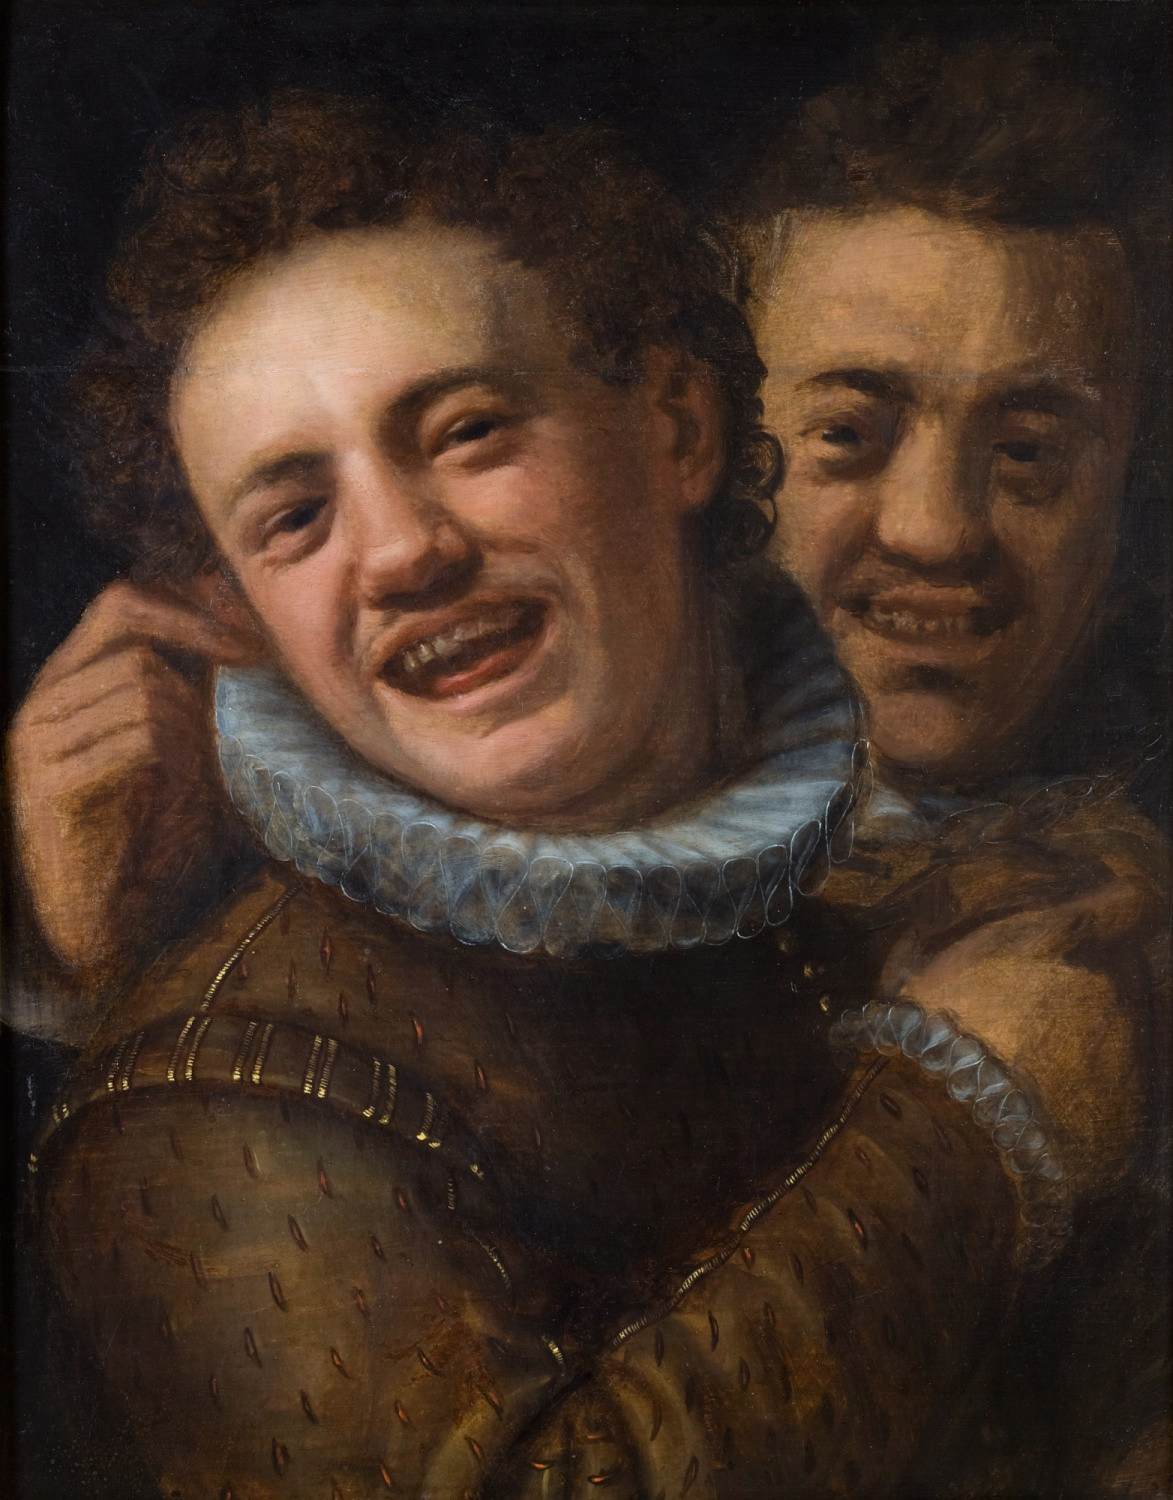 Two Laughing Men (Self-portrait)